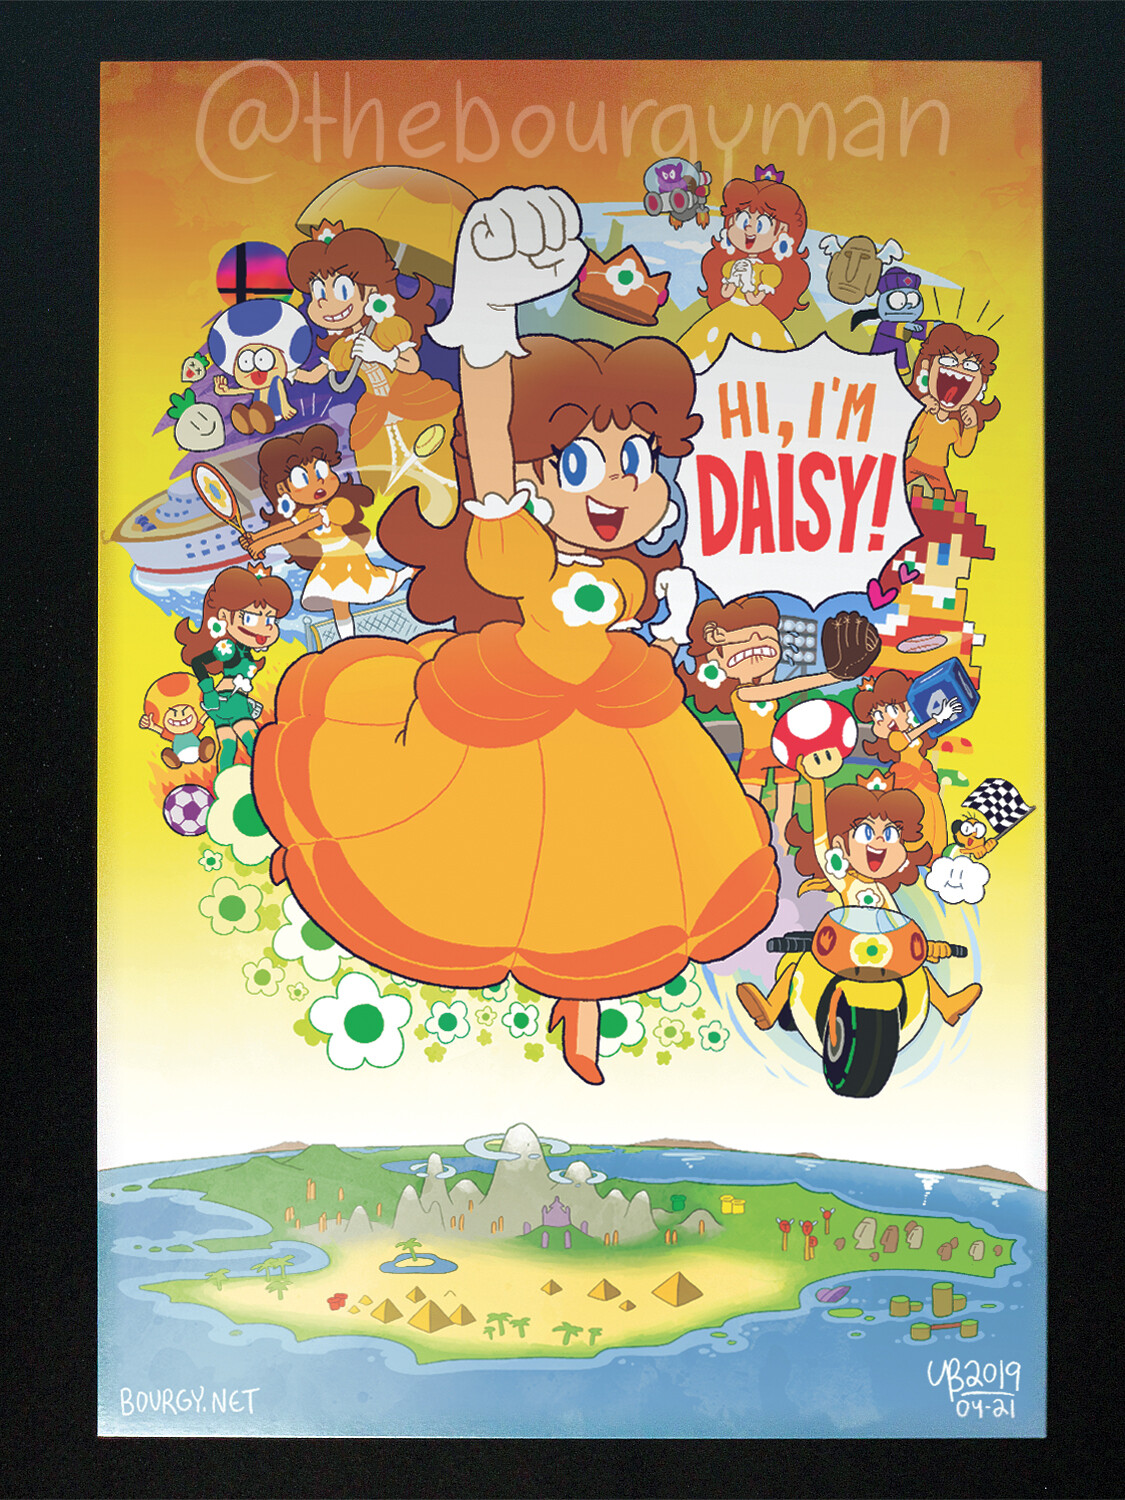 Hi, I'm Daisy! (Super Mario) 12 x 18" poster/affiche